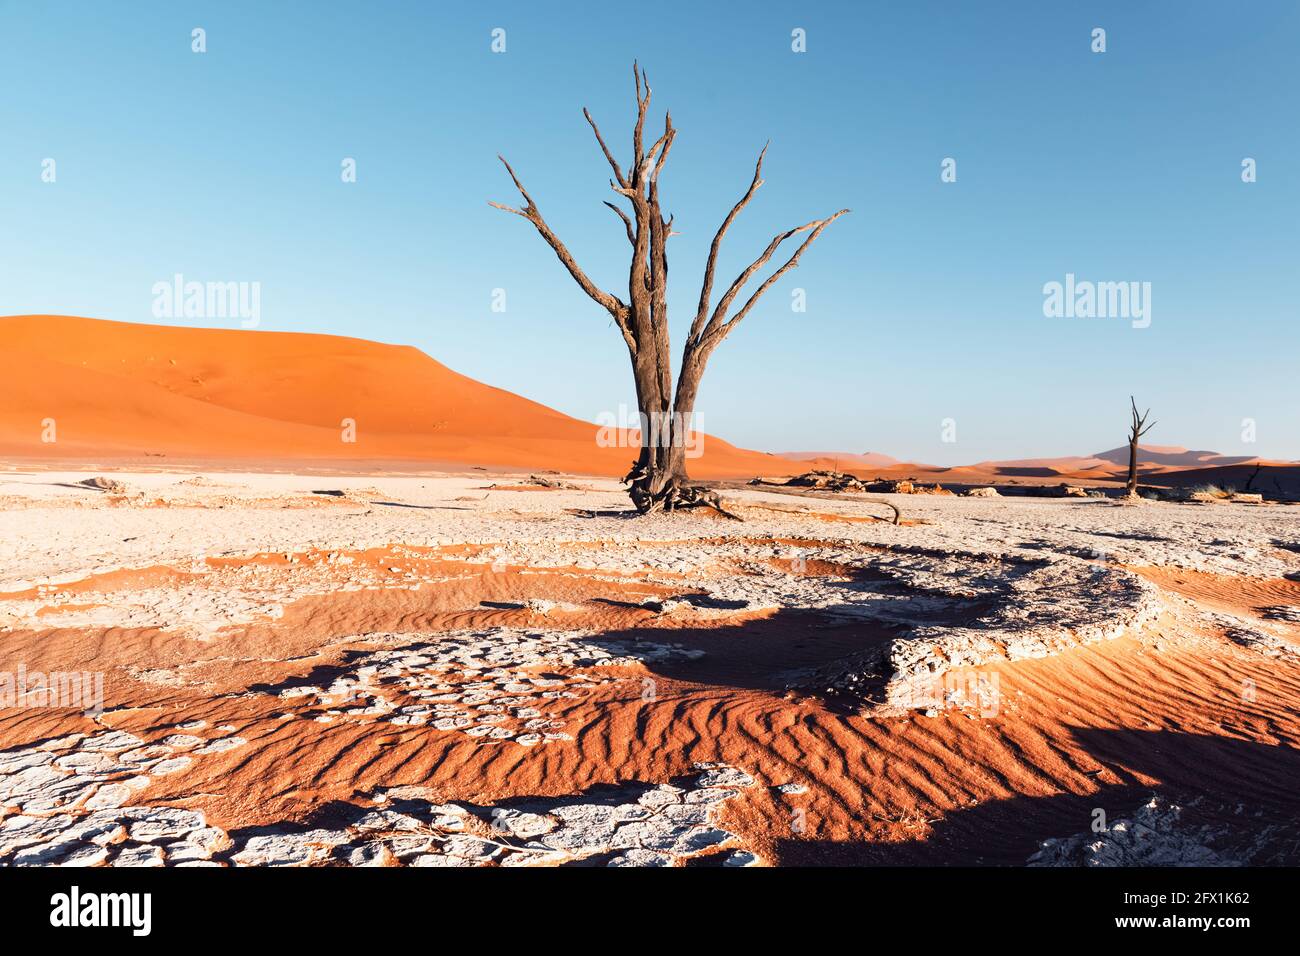 Tote Camelthorn Bäume bei Sonnenaufgang, Deadvlei, Namib-Naukluft National Park, Namibia, Afrika. Getrocknete Bäume in der Wüste Namib. Landschaftsfotografie Stockfoto